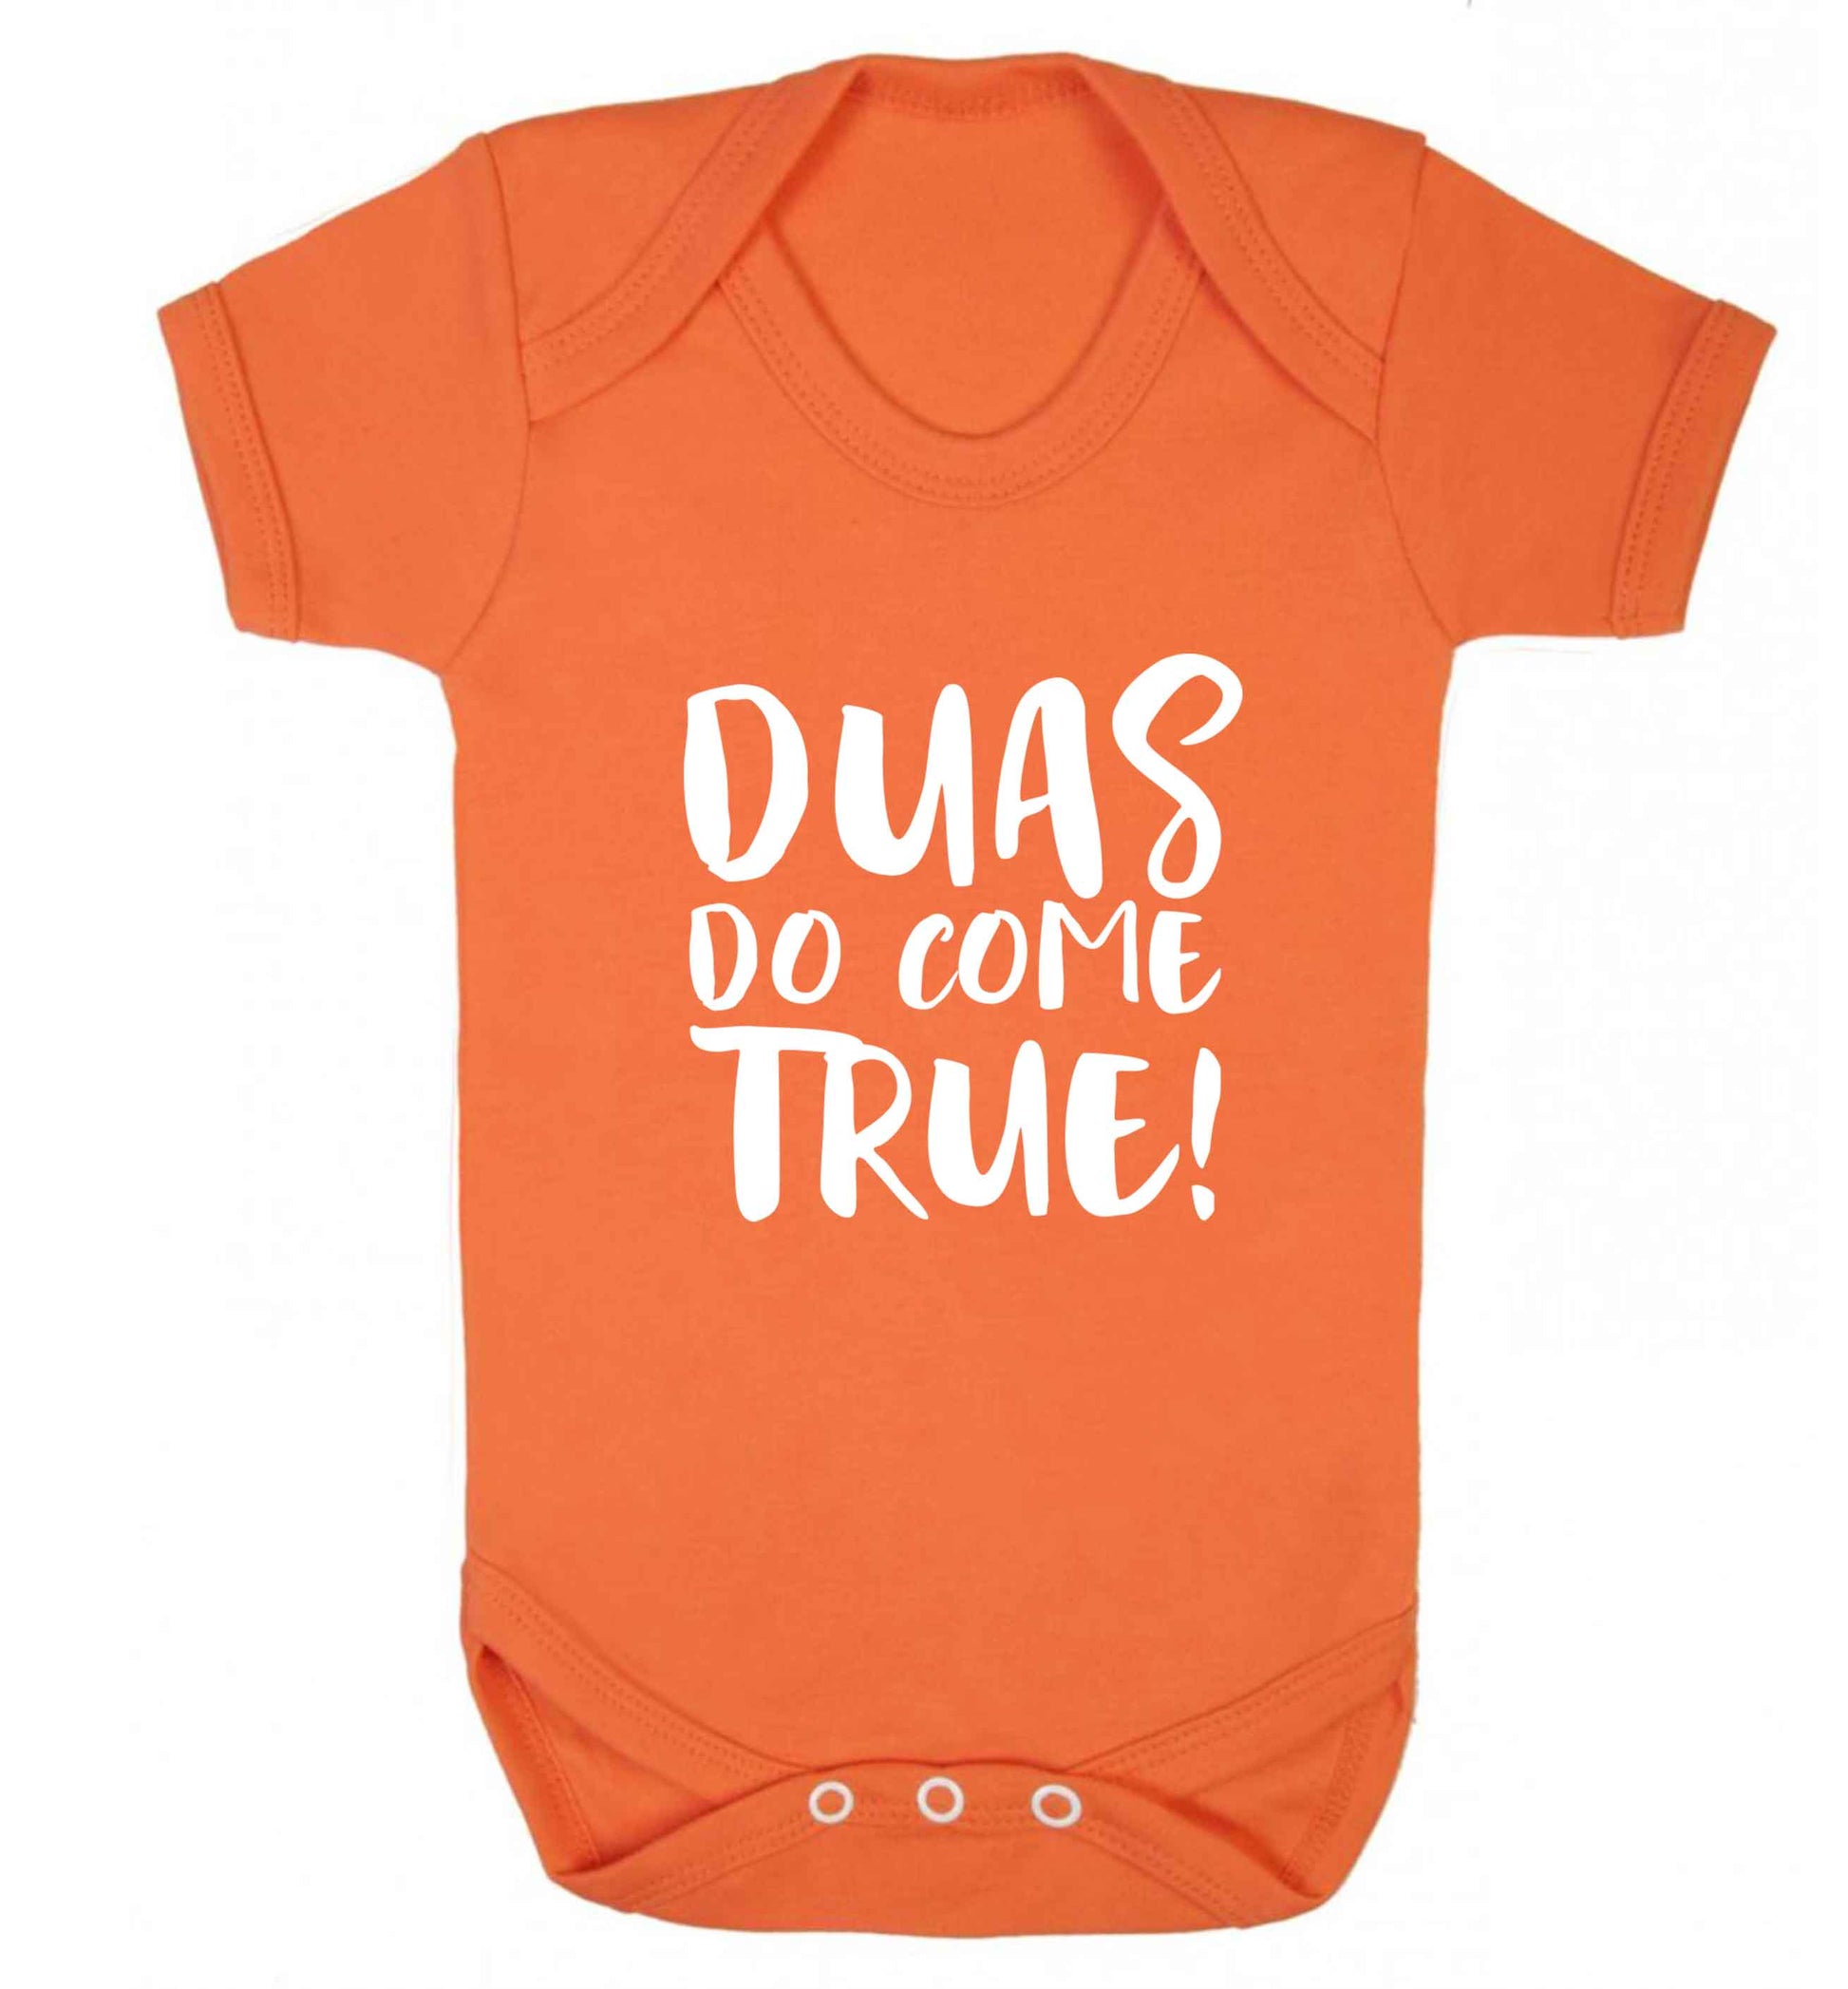 Duas do come true baby vest orange 18-24 months